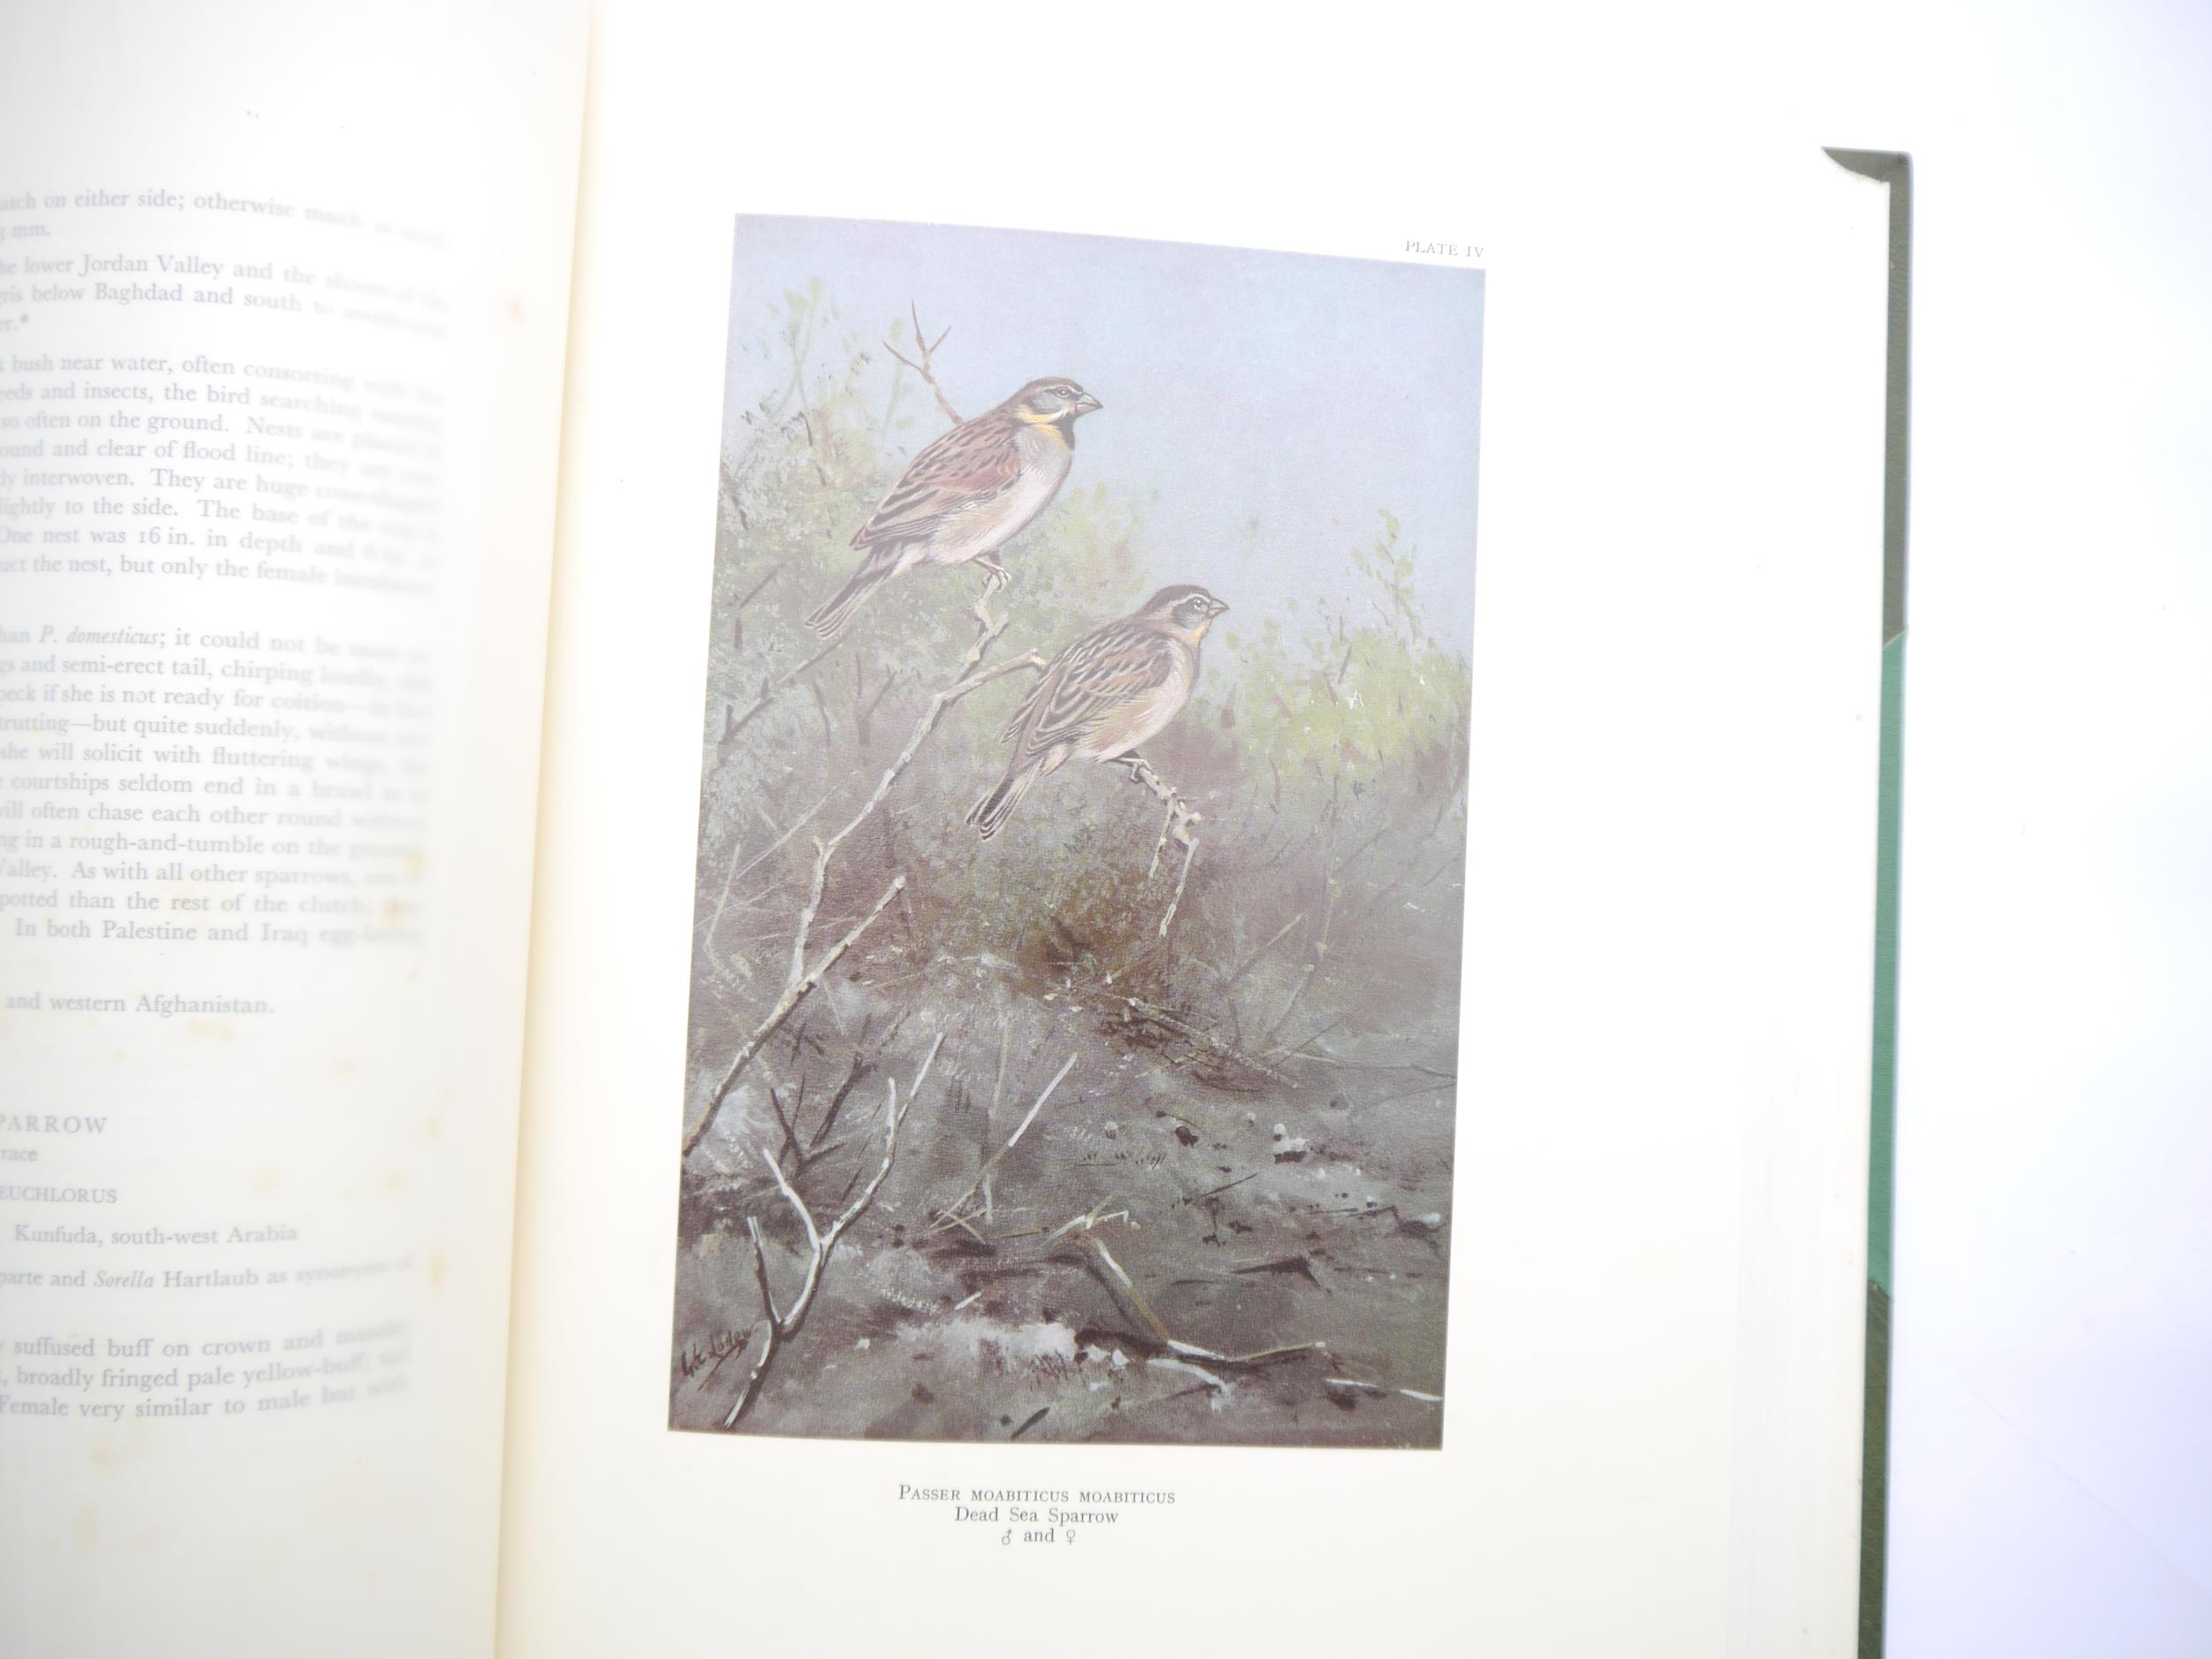 Colonel R. Meinertzhagen: 'Birds of Arabia', London, Henry Sotheran, 1980, edition de Luxe, one of - Image 3 of 7